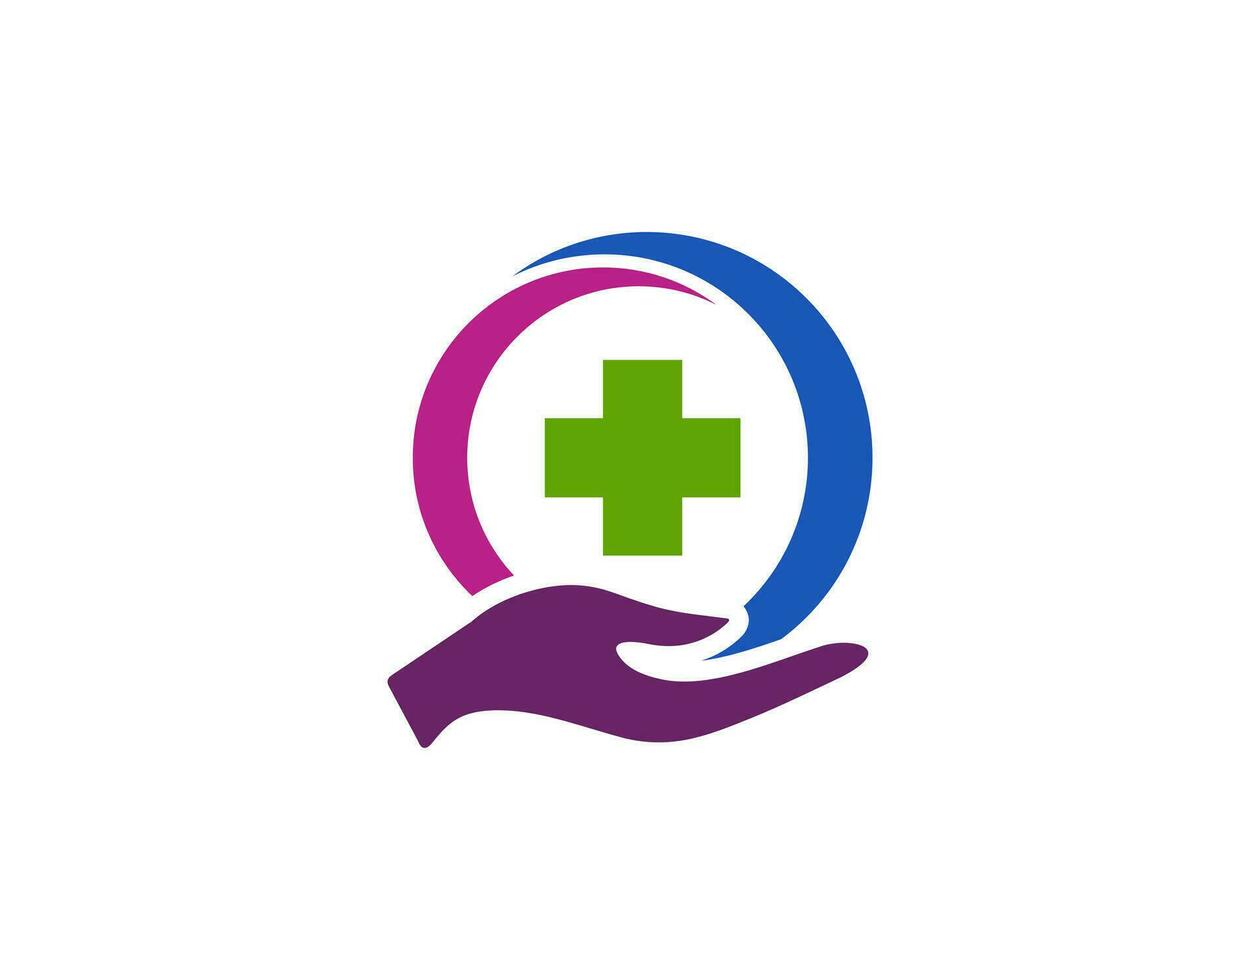 medizinisch Logo Design Vektor